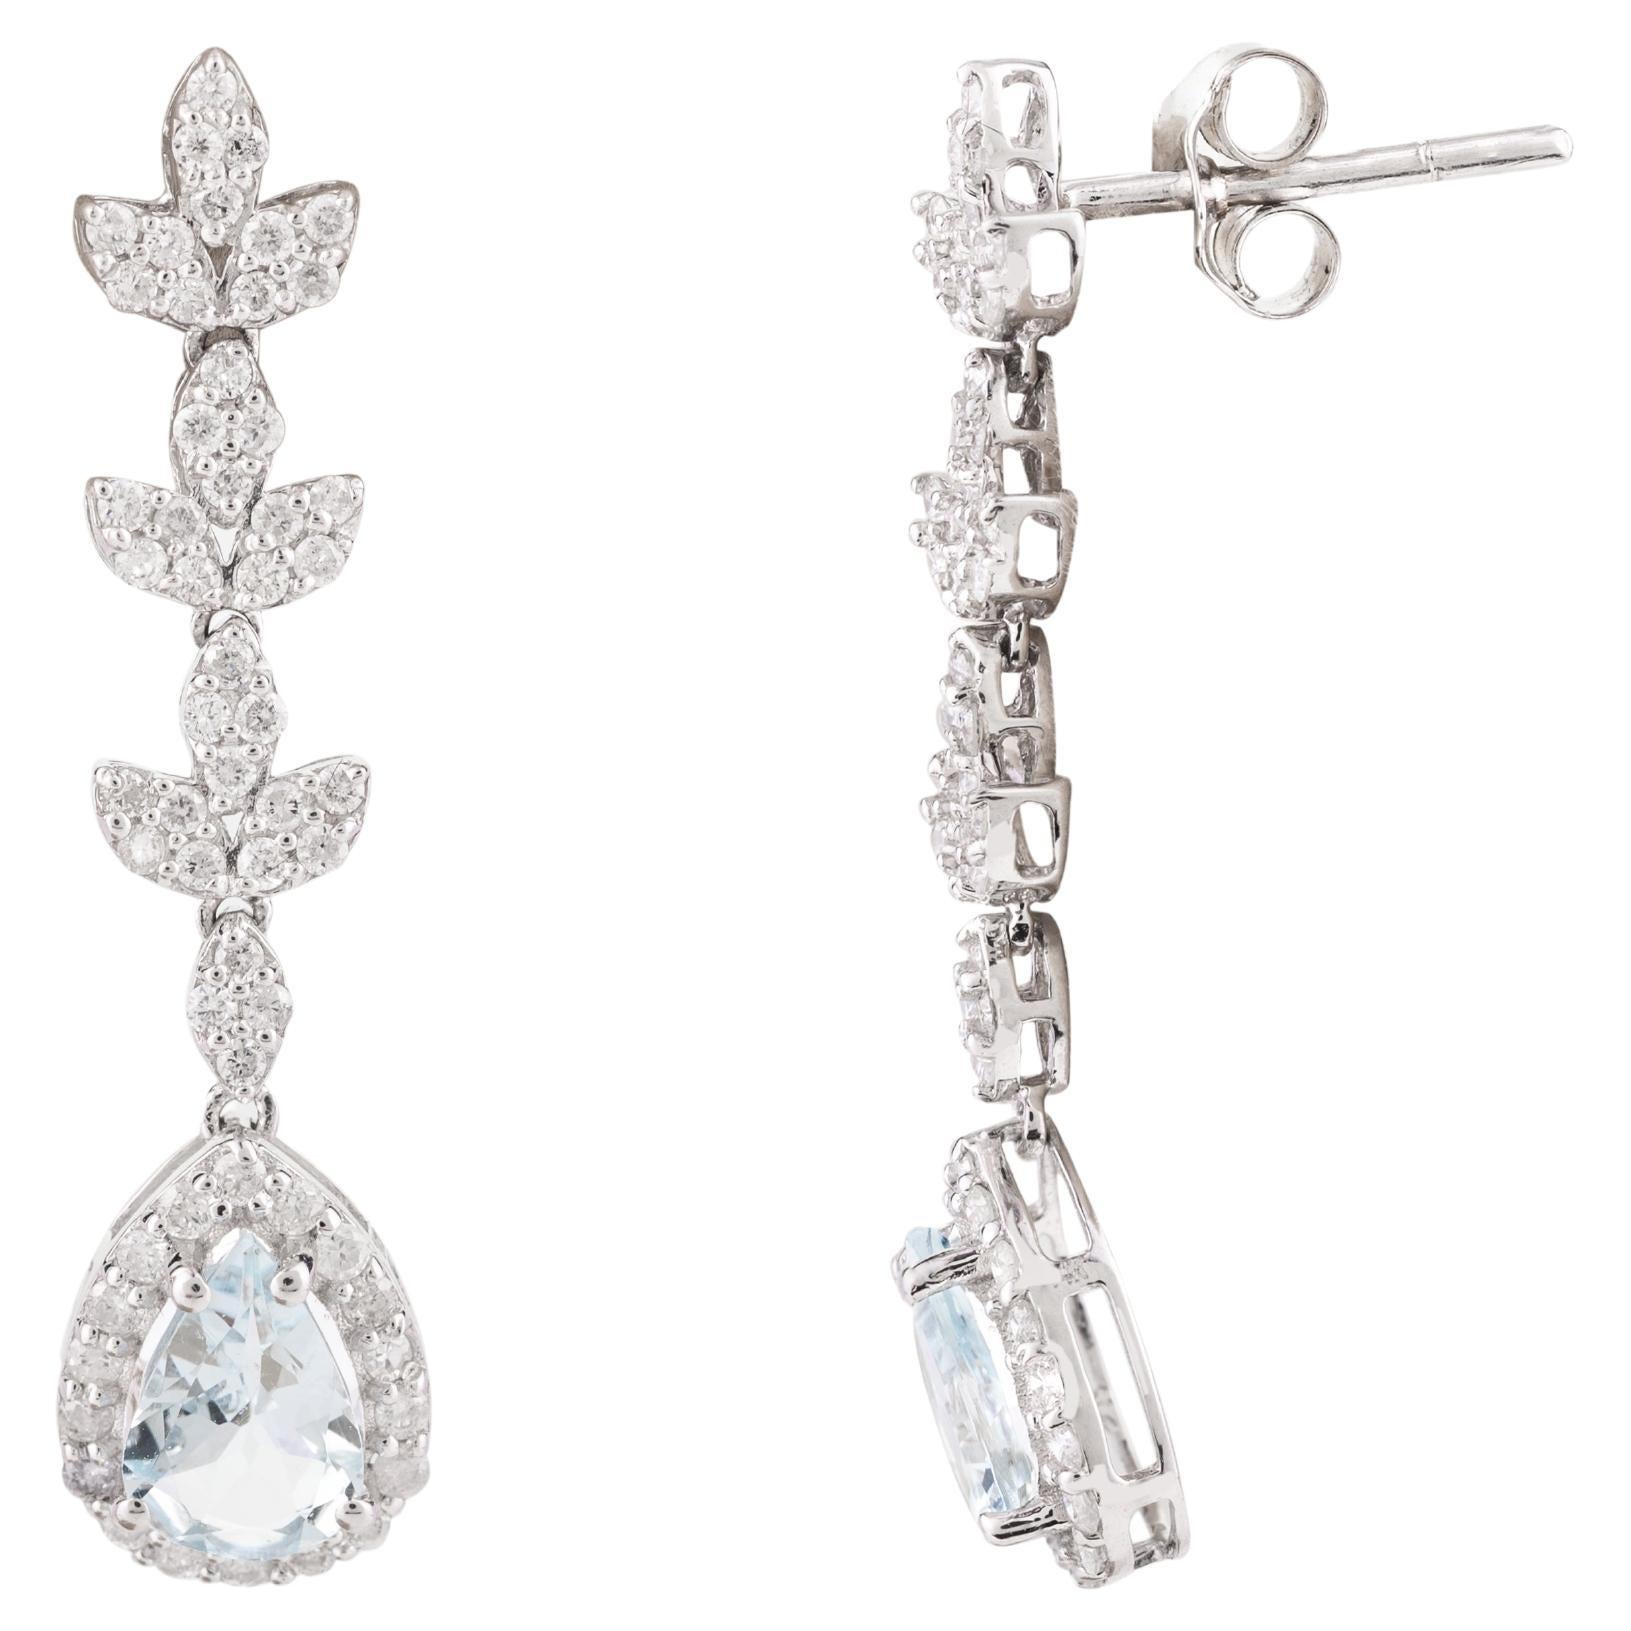 Certified Aquamarine Diamond Long Dangle Earrings in 14k White Gold For Sale